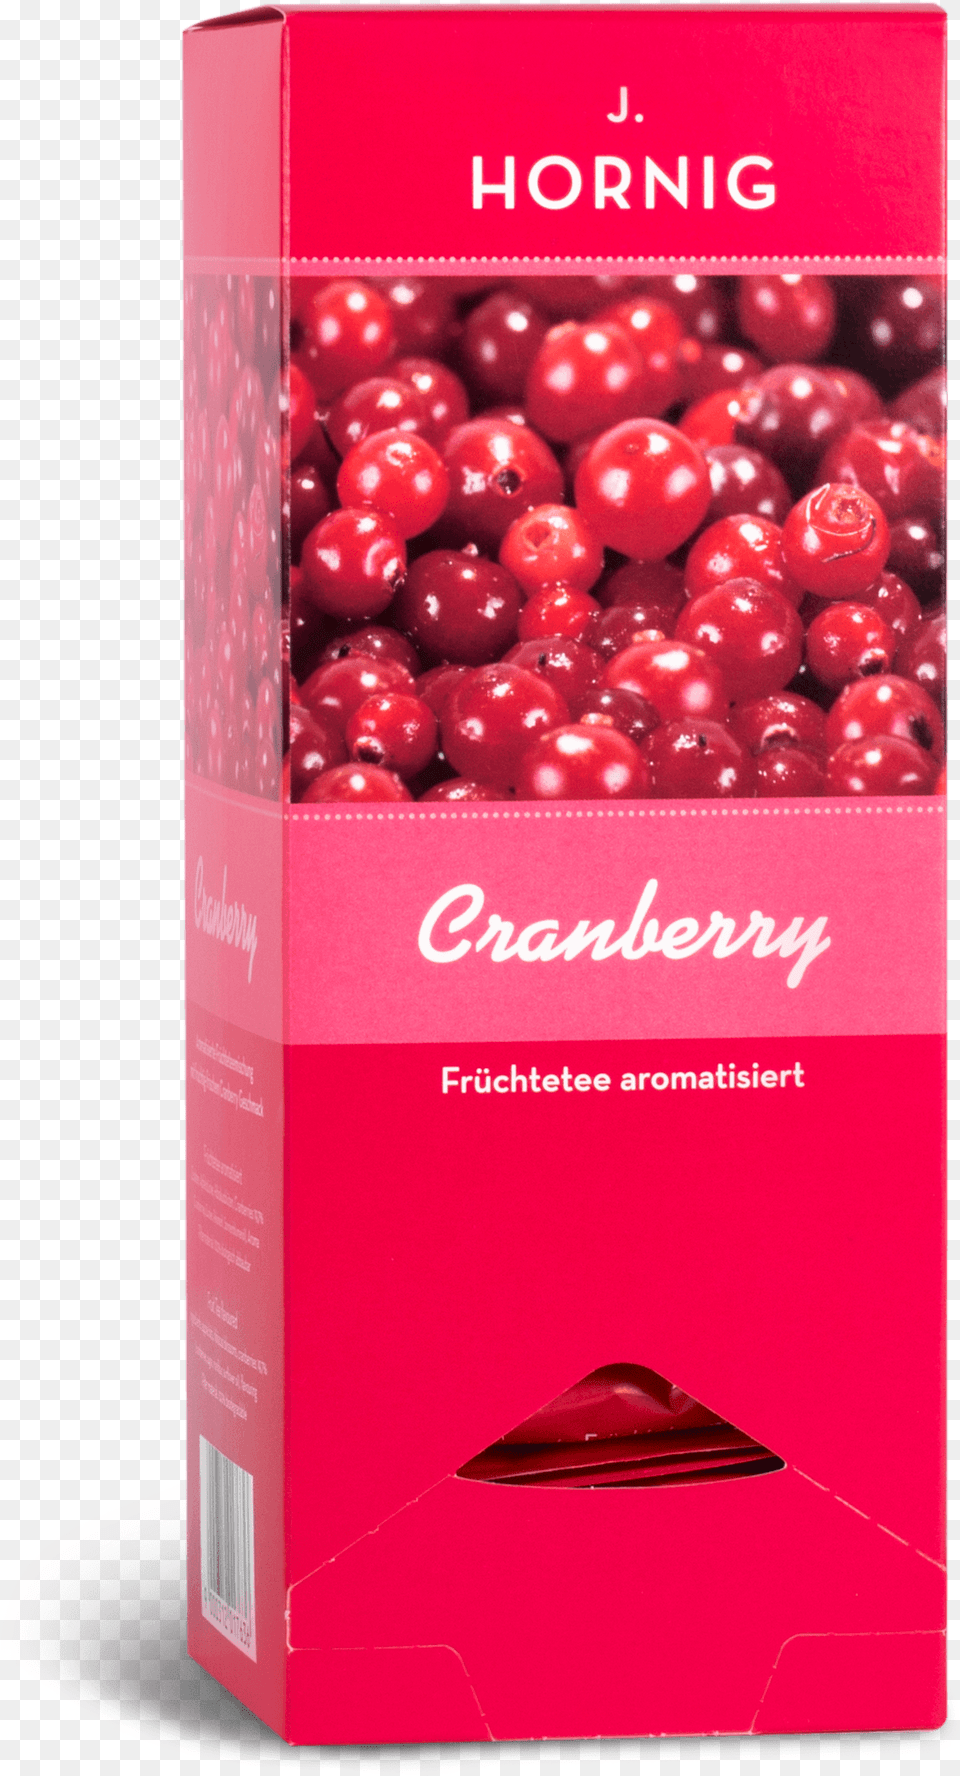 Hd Hornig Cranberry Tea Cranberry, Food, Fruit, Plant, Produce Png Image